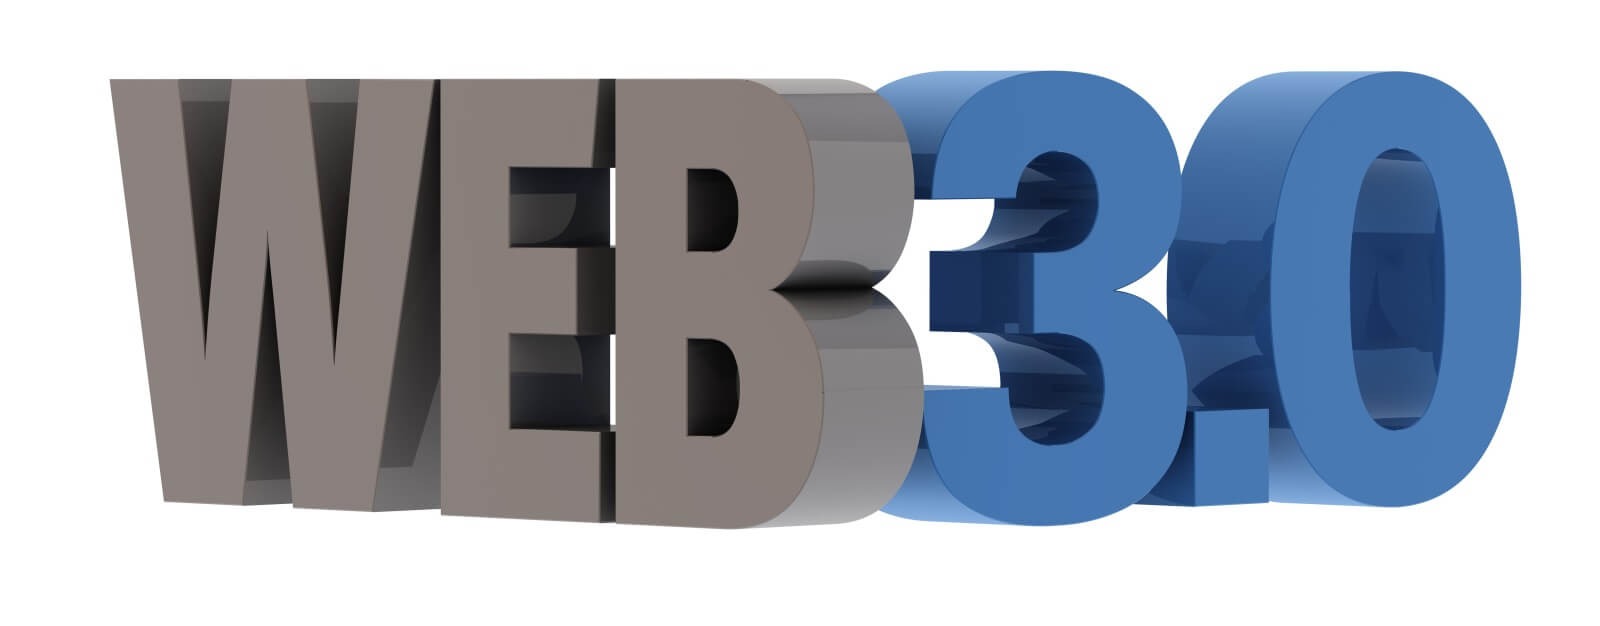 00 003. Web3. Веб 3.0. Web3 картинка. Web3 логотип.